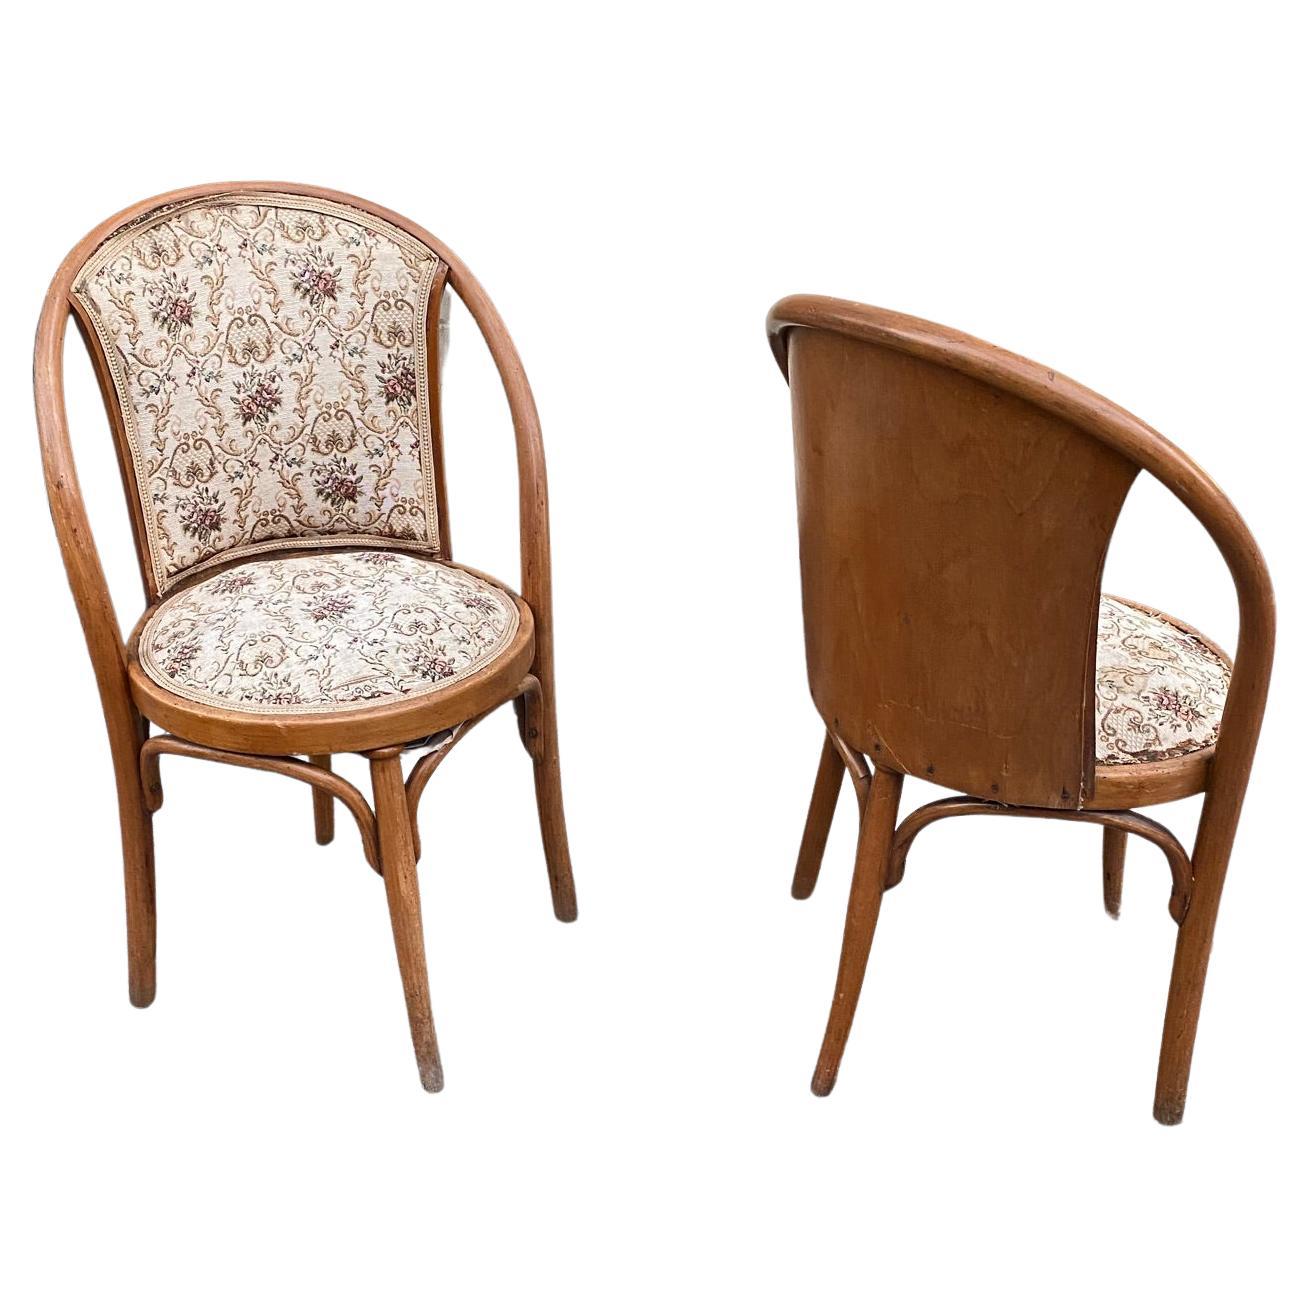 2 Secession Style Chairs circa 1900 For Sale